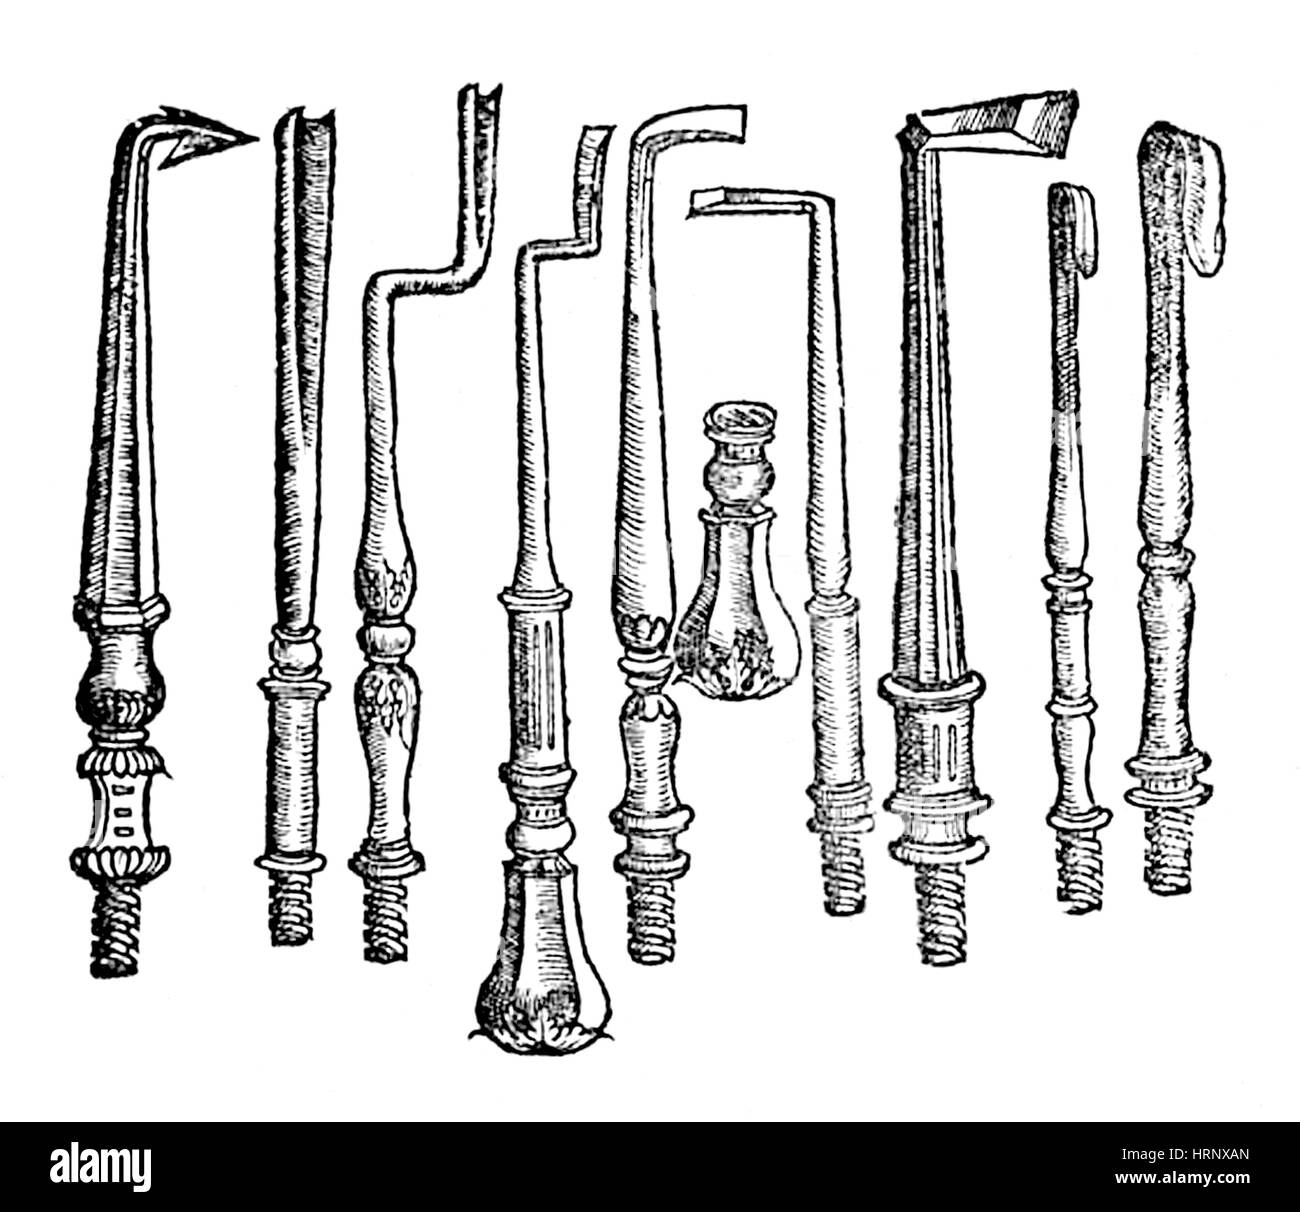 Chirurgische Instrumente, 16. Jahrhundert Stockfoto